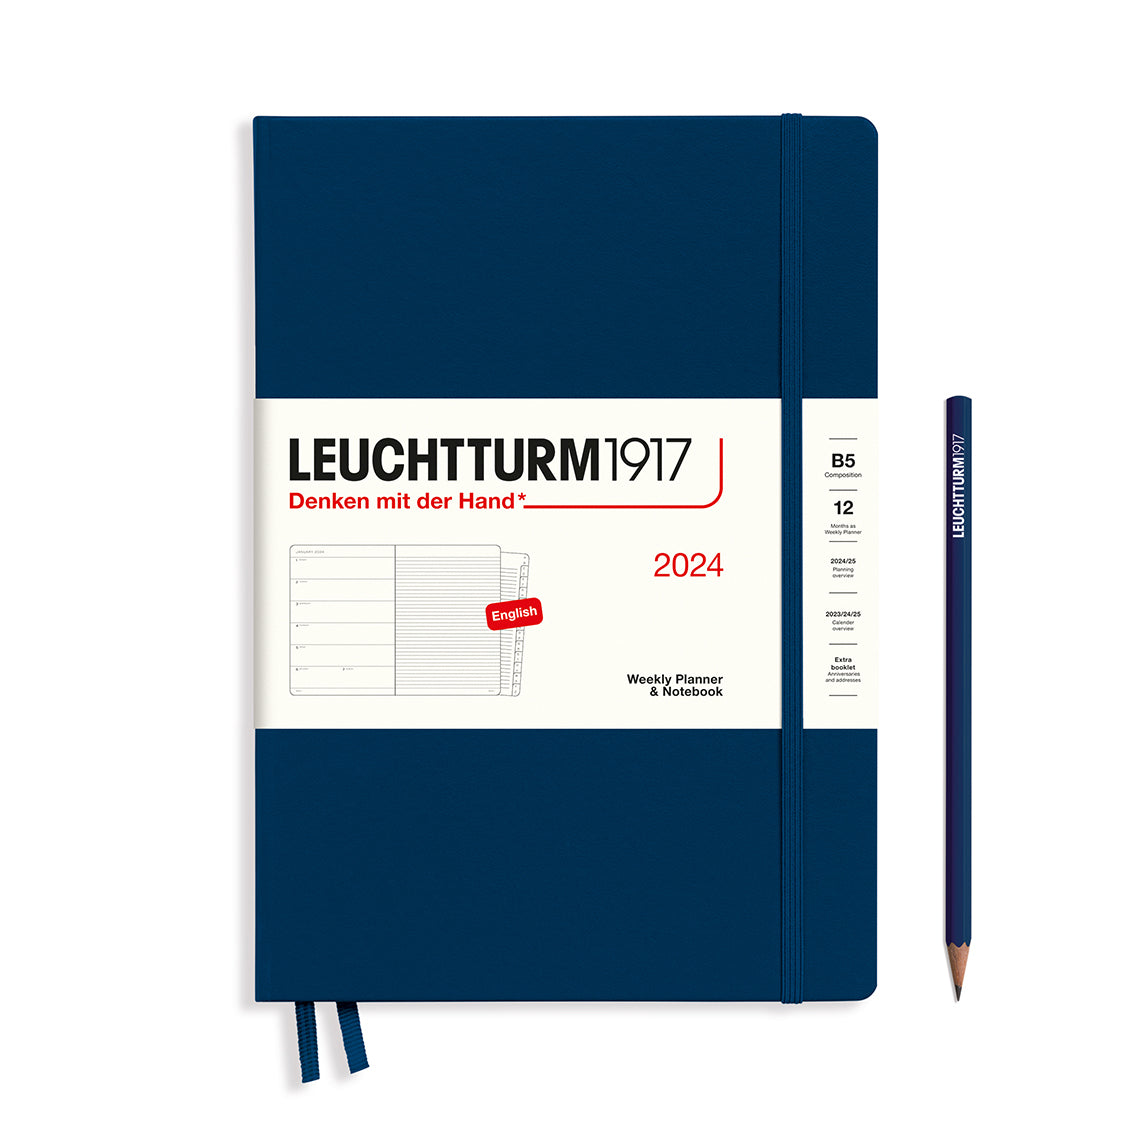 Leuchtturm 2023 agenda hardcover composition b5 week